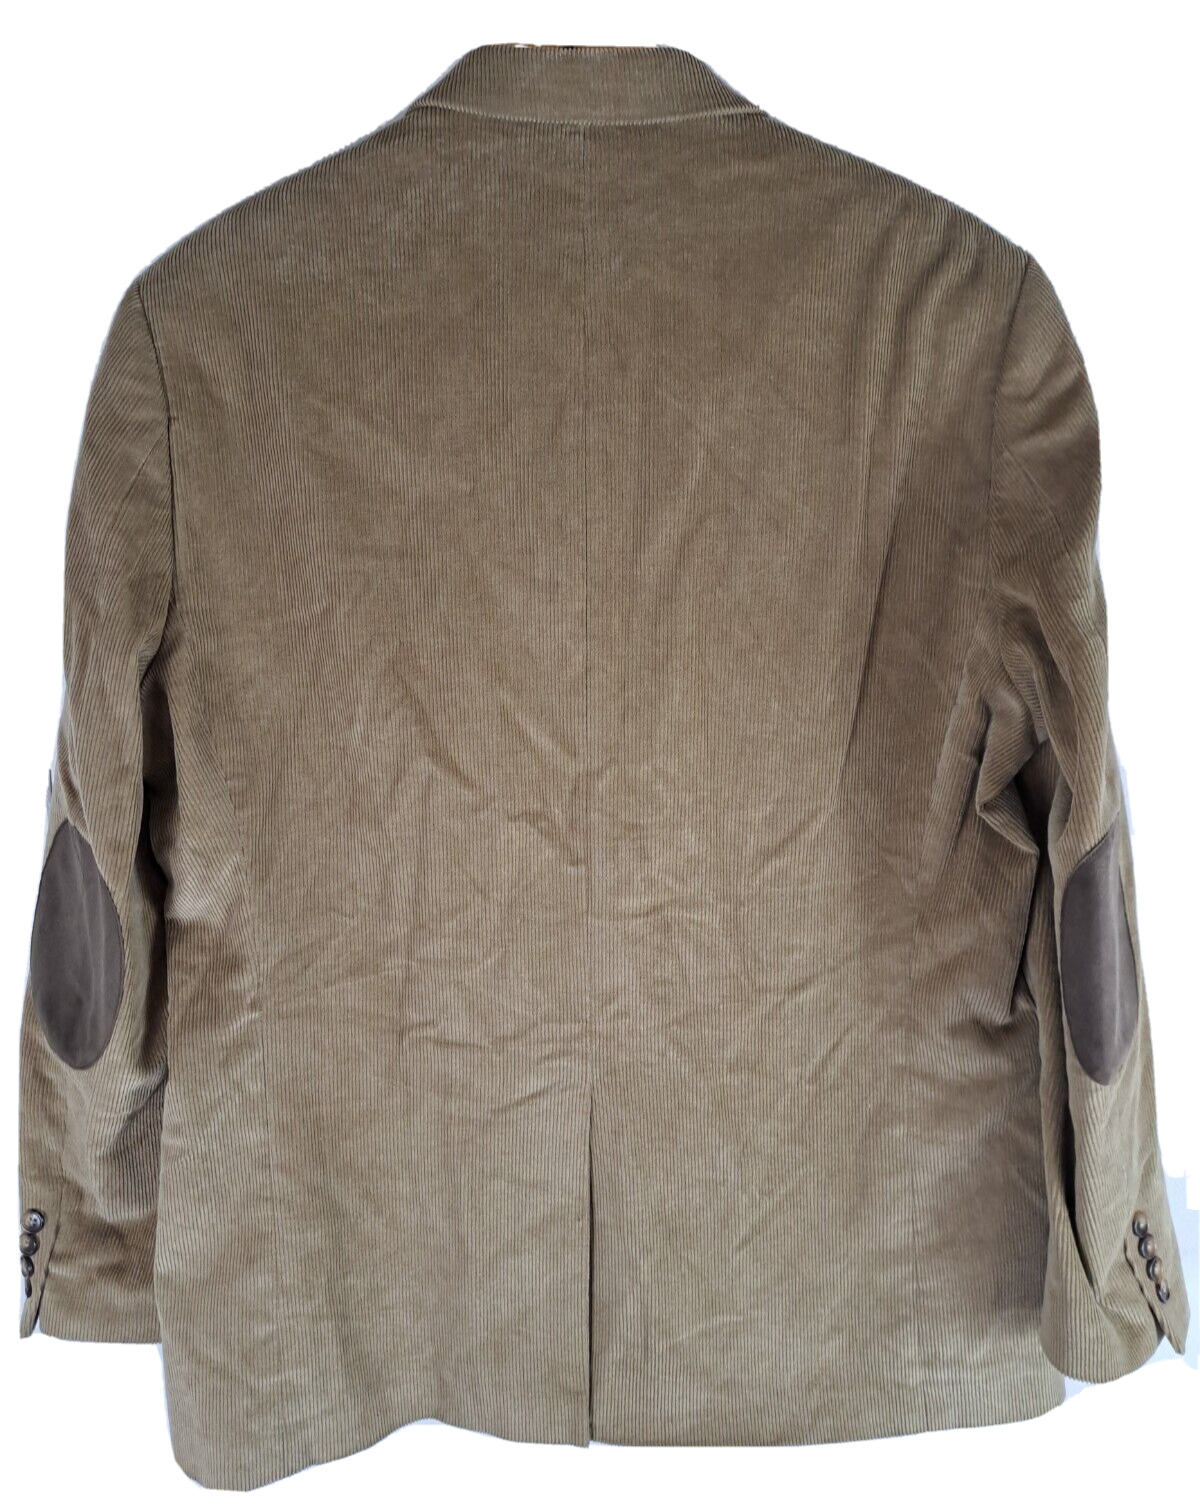 Men's Chaps Blazer Corduroy Sports Coat Brown Elb… - image 6